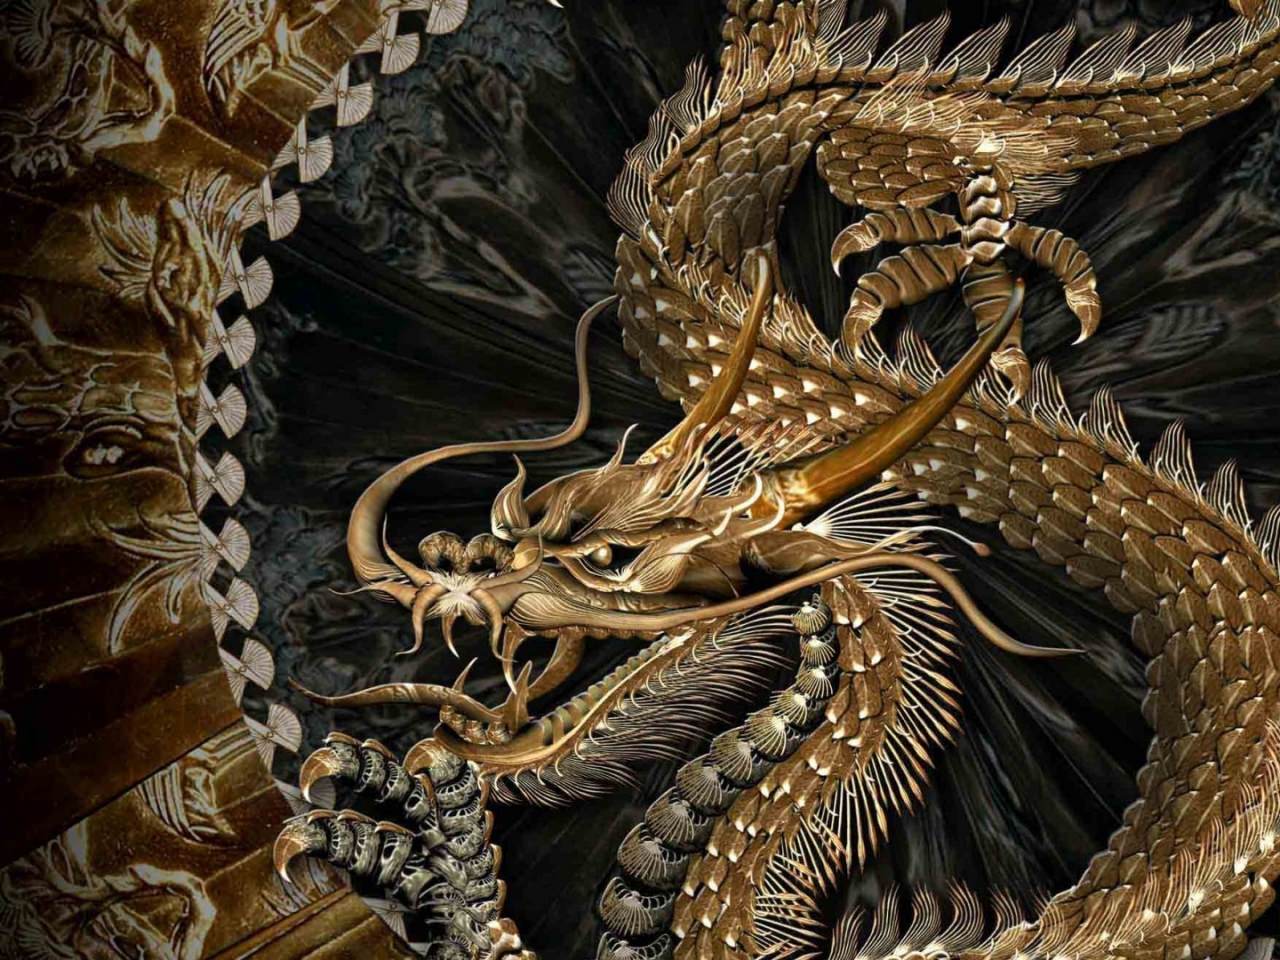 Black and Gold Dragon Wallpaper Free Black and Gold Dragon